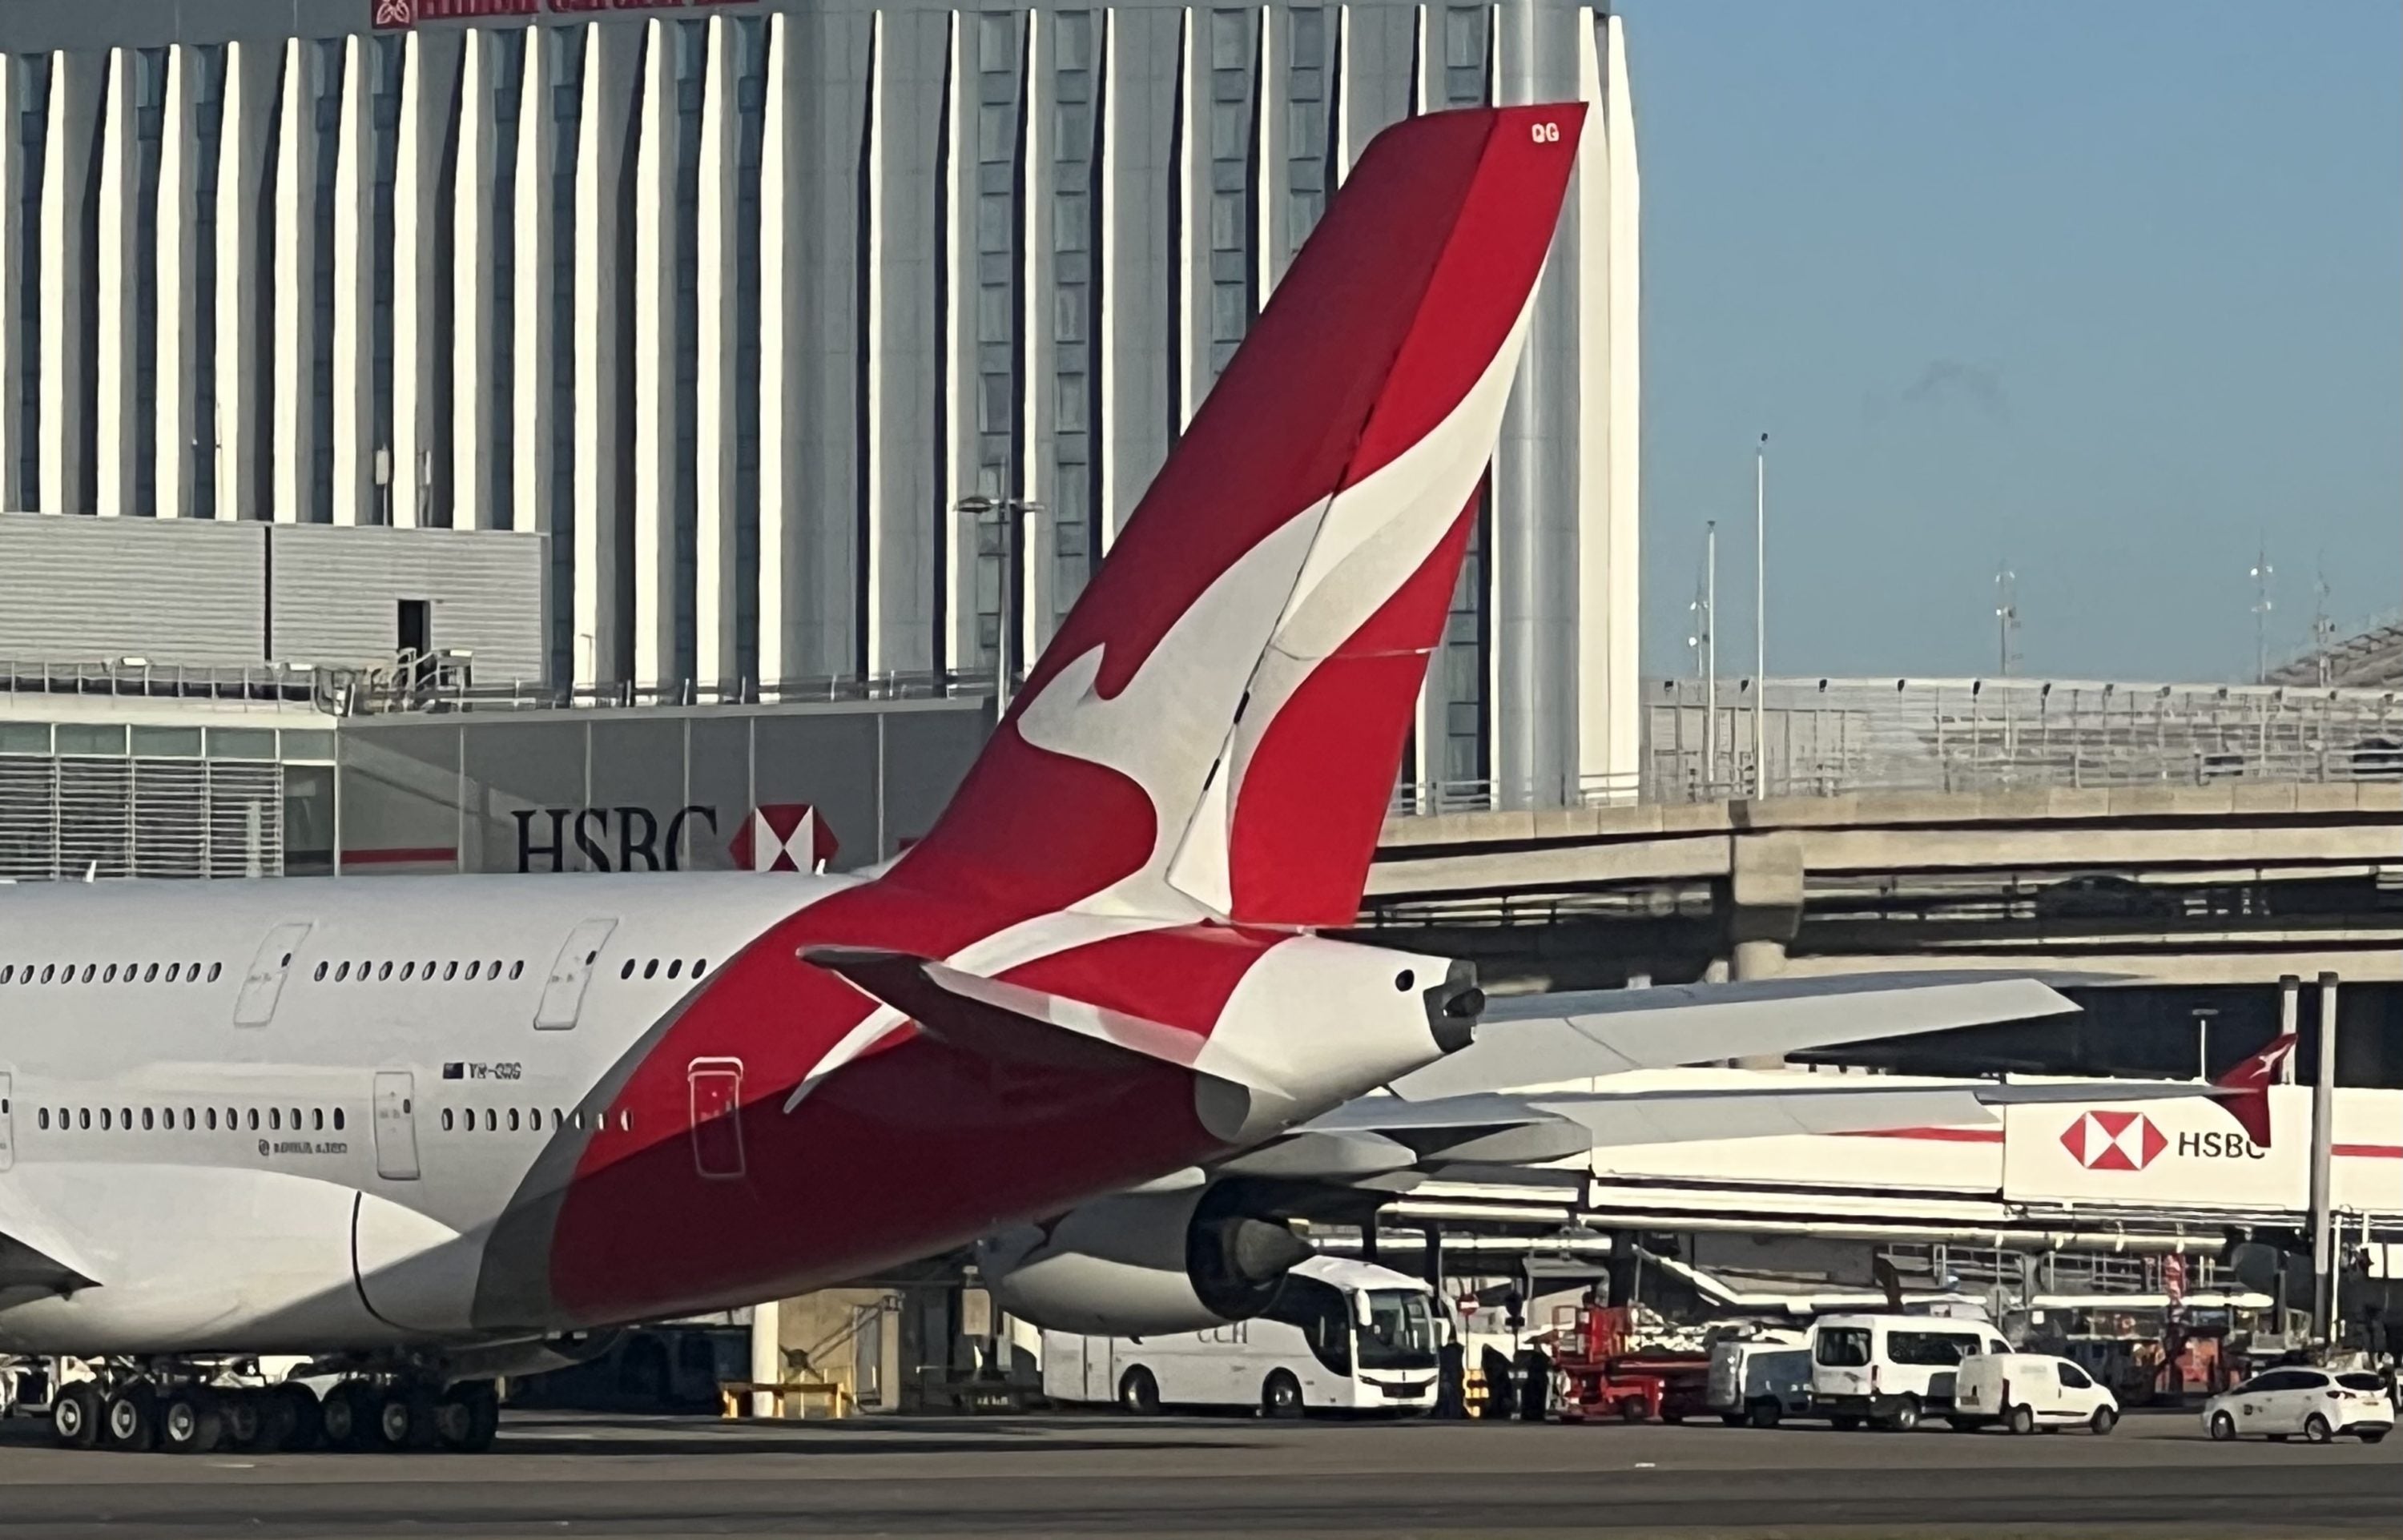 Qantas A380 tailfin